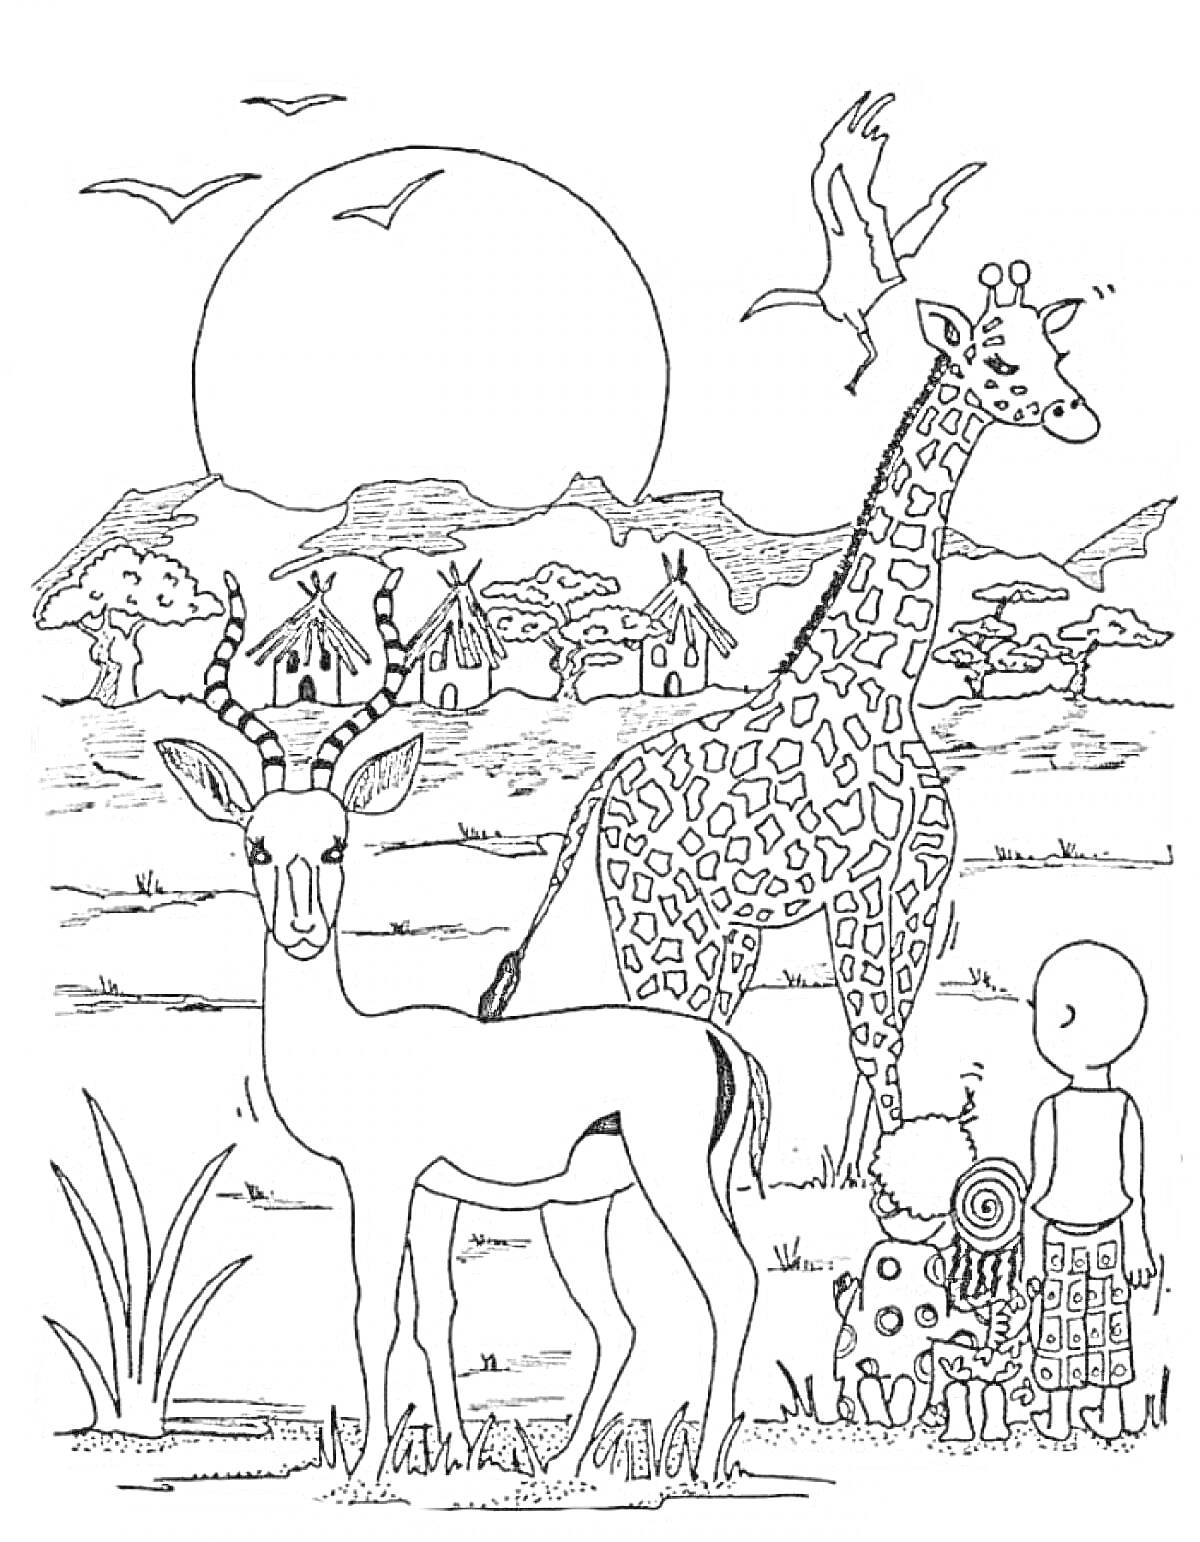 Жираф и антилопа на африканском ландшафте с жителями деревни на фоне заката